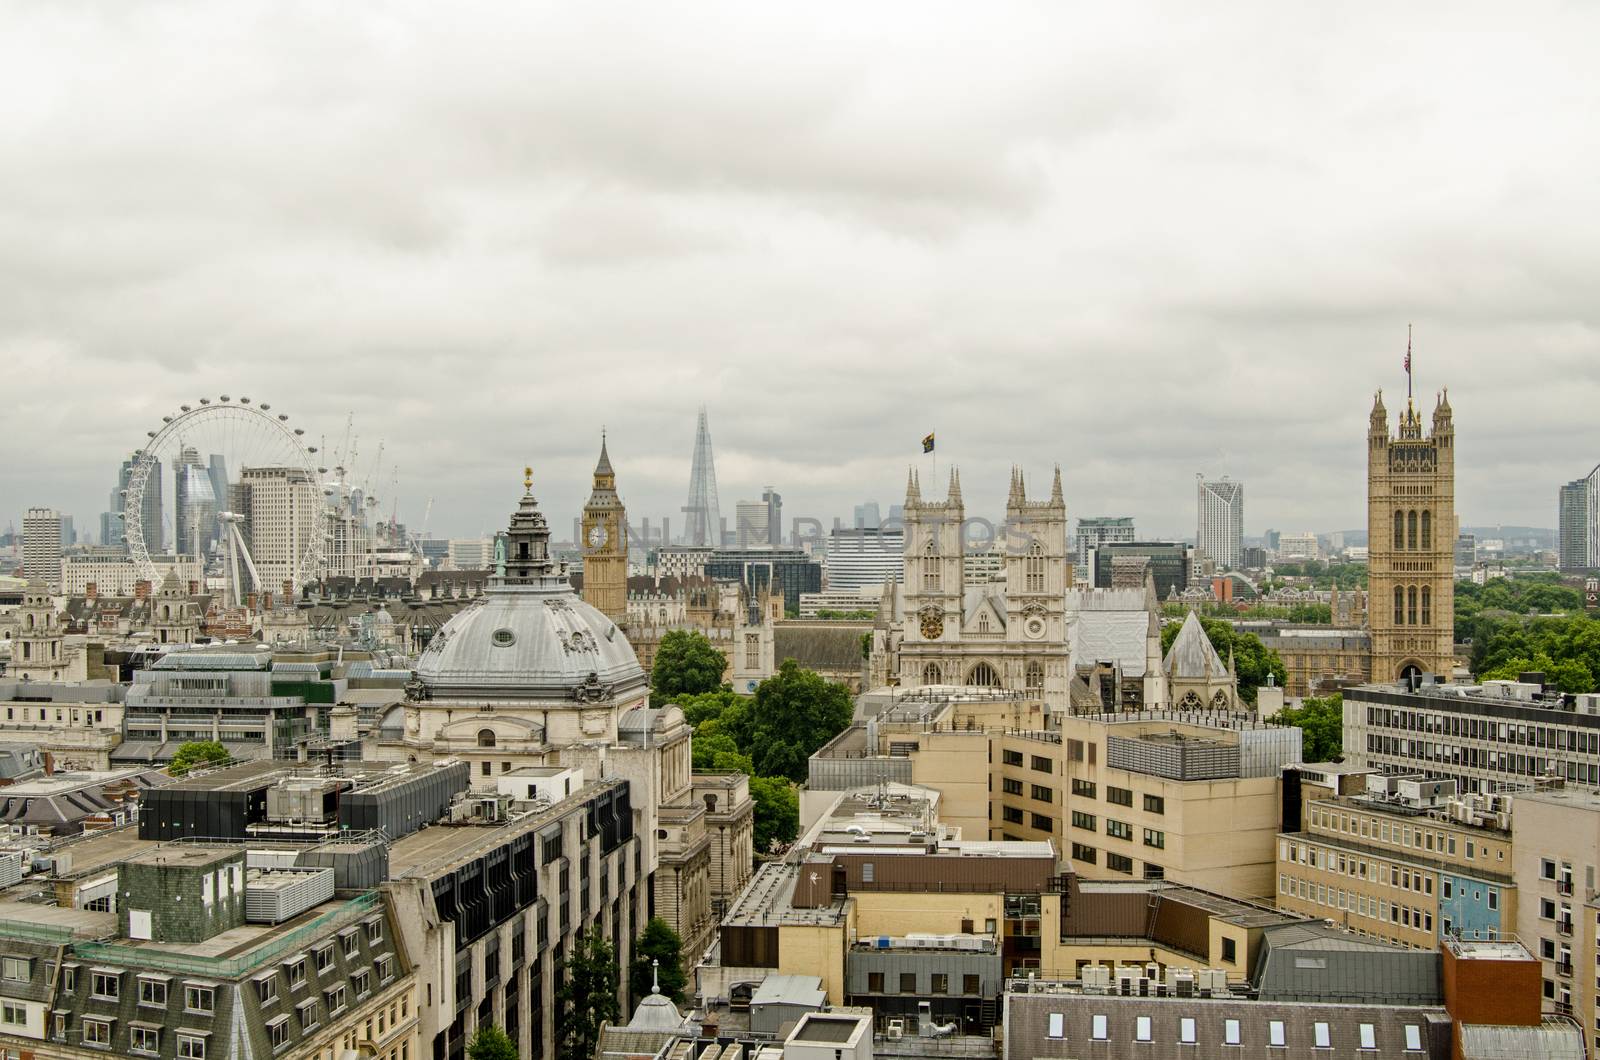 Westminster Skyline, London by BasPhoto